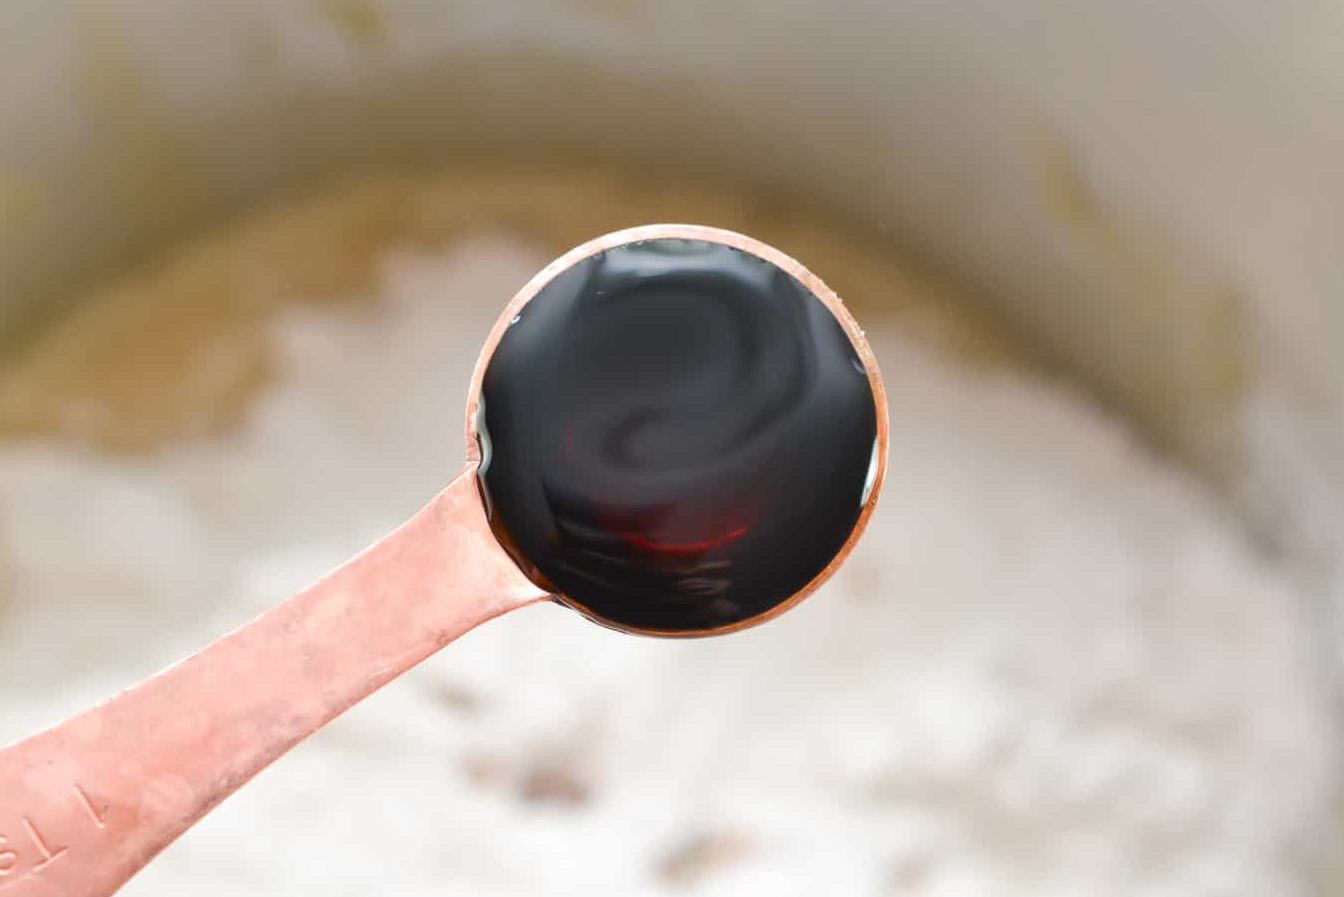 add 1 tsp of vanilla extract and ¼ tsp of salt.